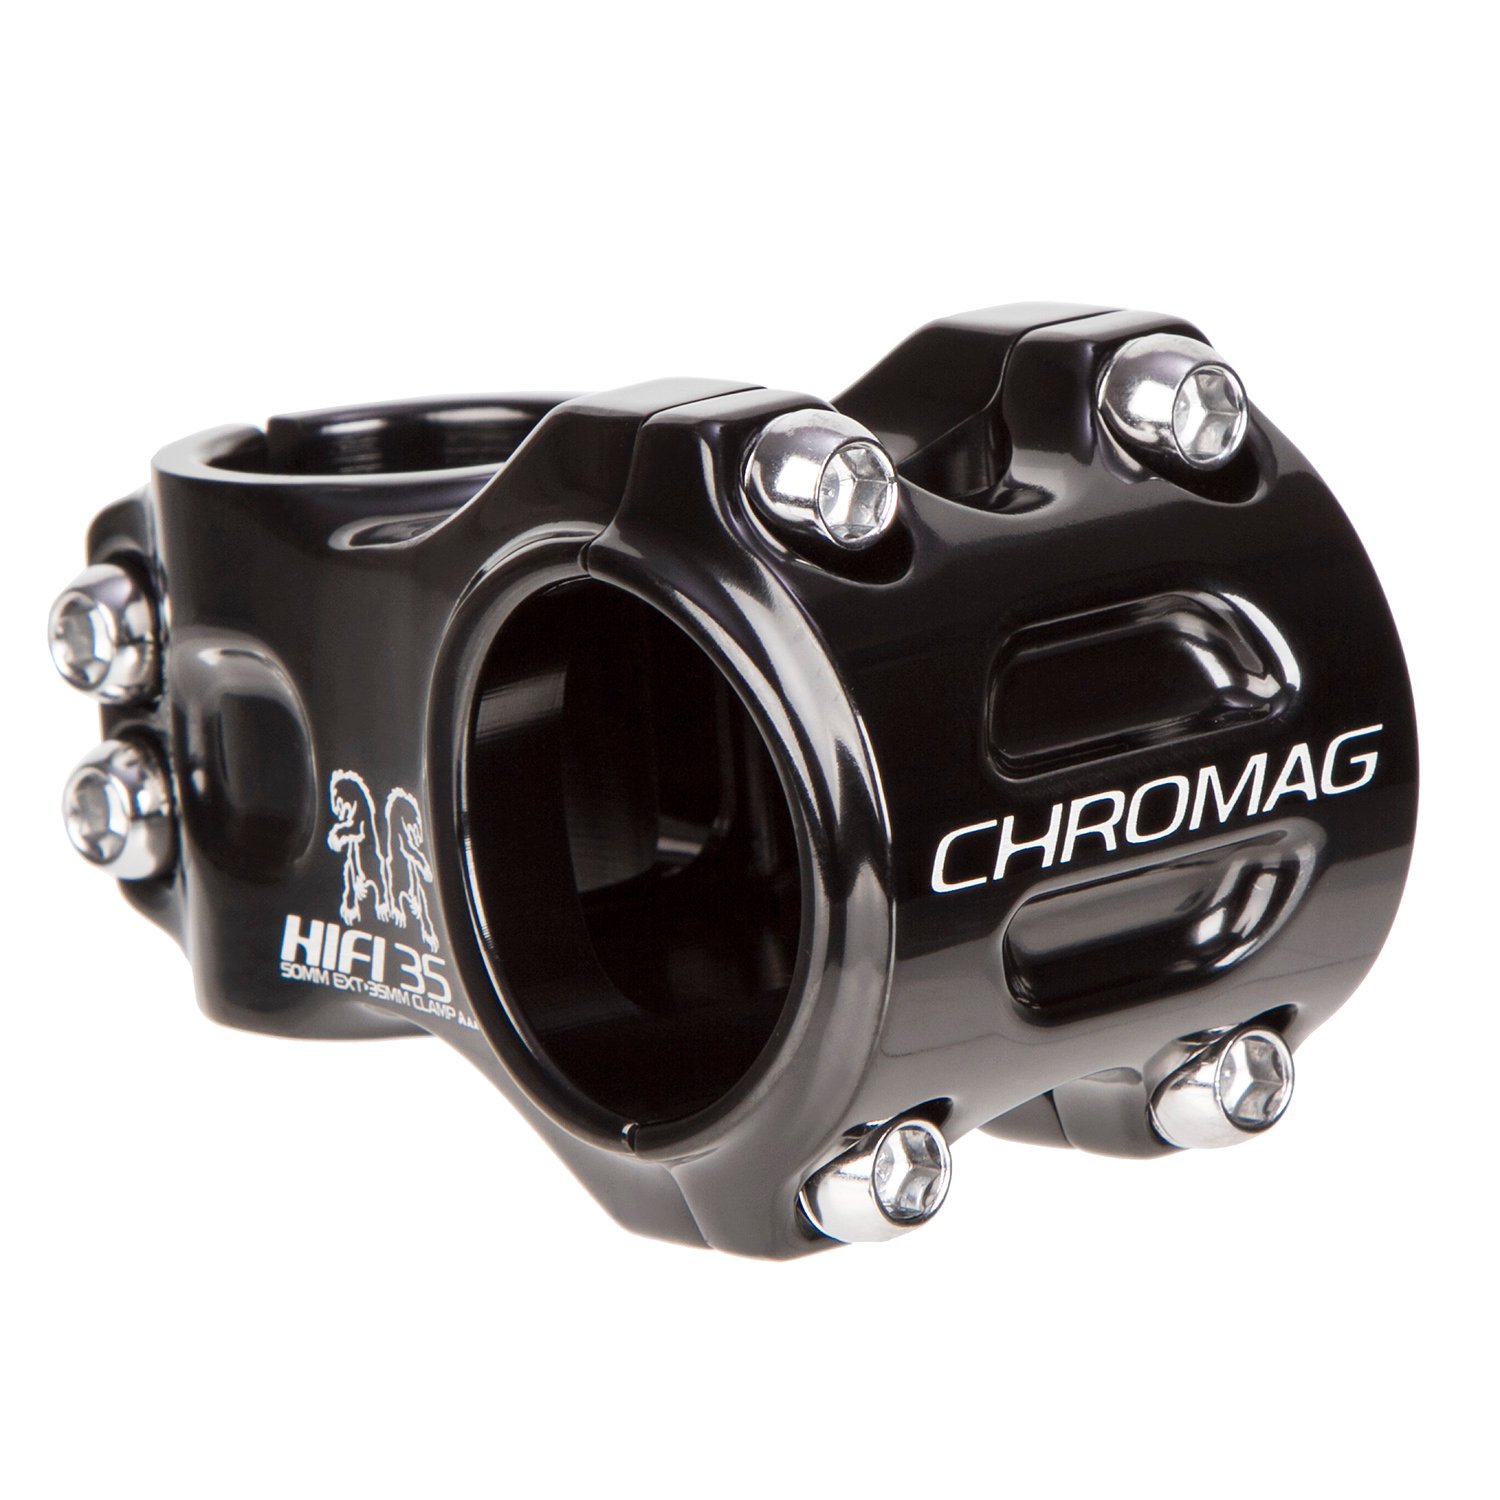 Chromag Attacco Manubrio MTB HIFI 35.0 mm, 50 mm Reach, Nero